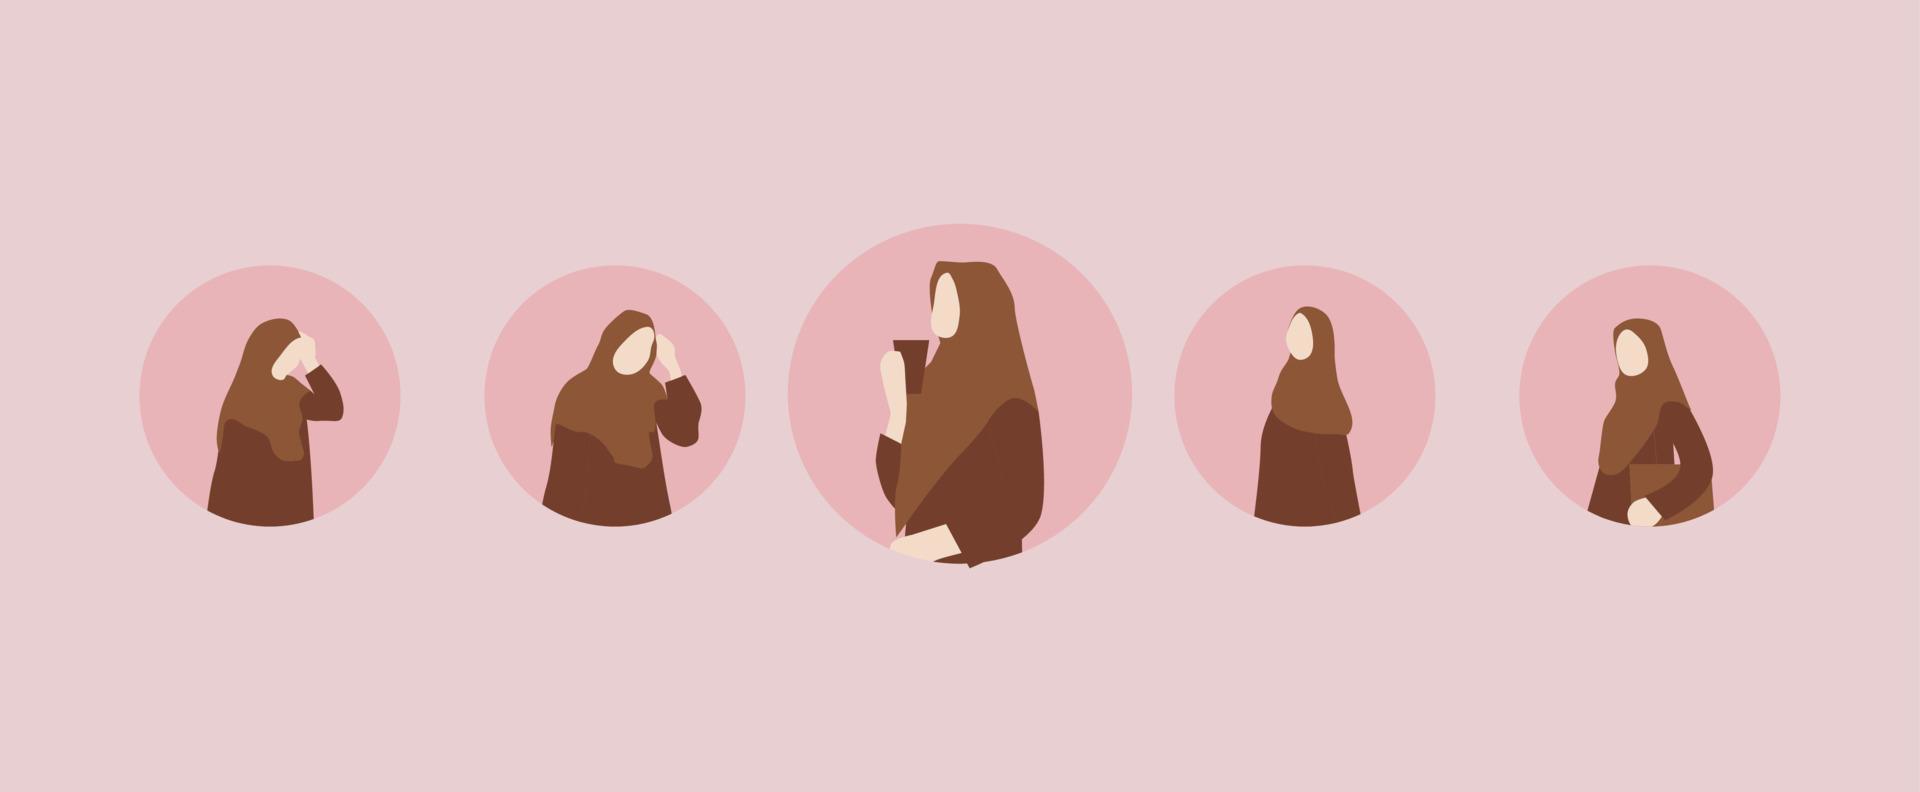 Muslim woman avatar on circle vector